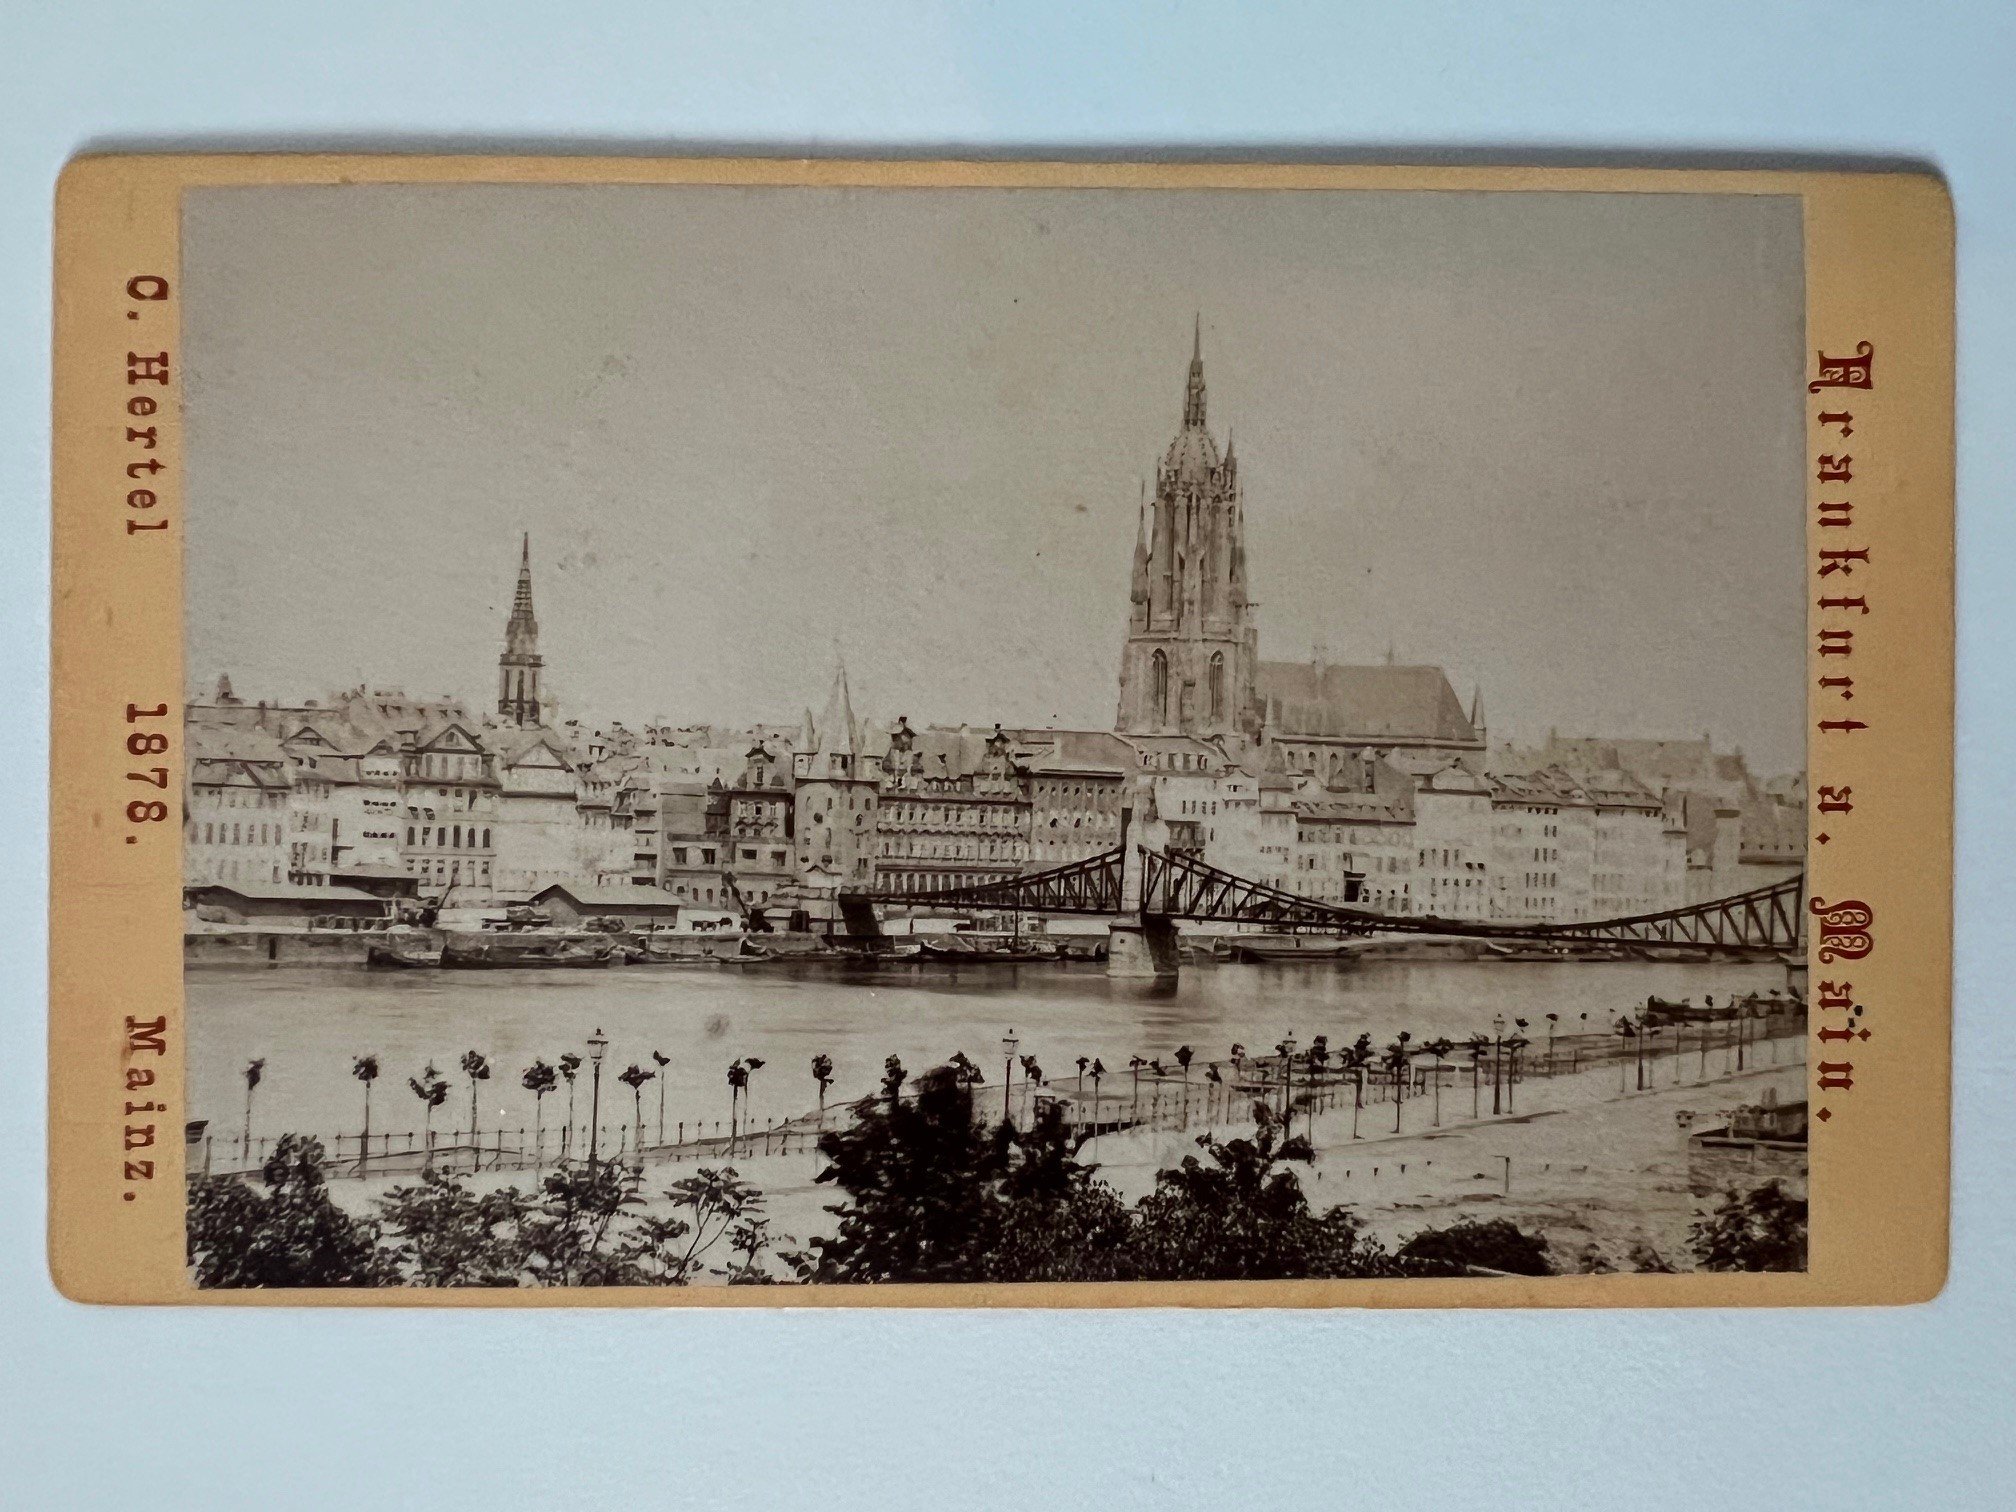 CdV, Carl Hertel, Frankfurt, Main-Ponorama, 1878. (Taunus-Rhein-Main - Regionalgeschichtliche Sammlung Dr. Stefan Naas CC BY-NC-SA)